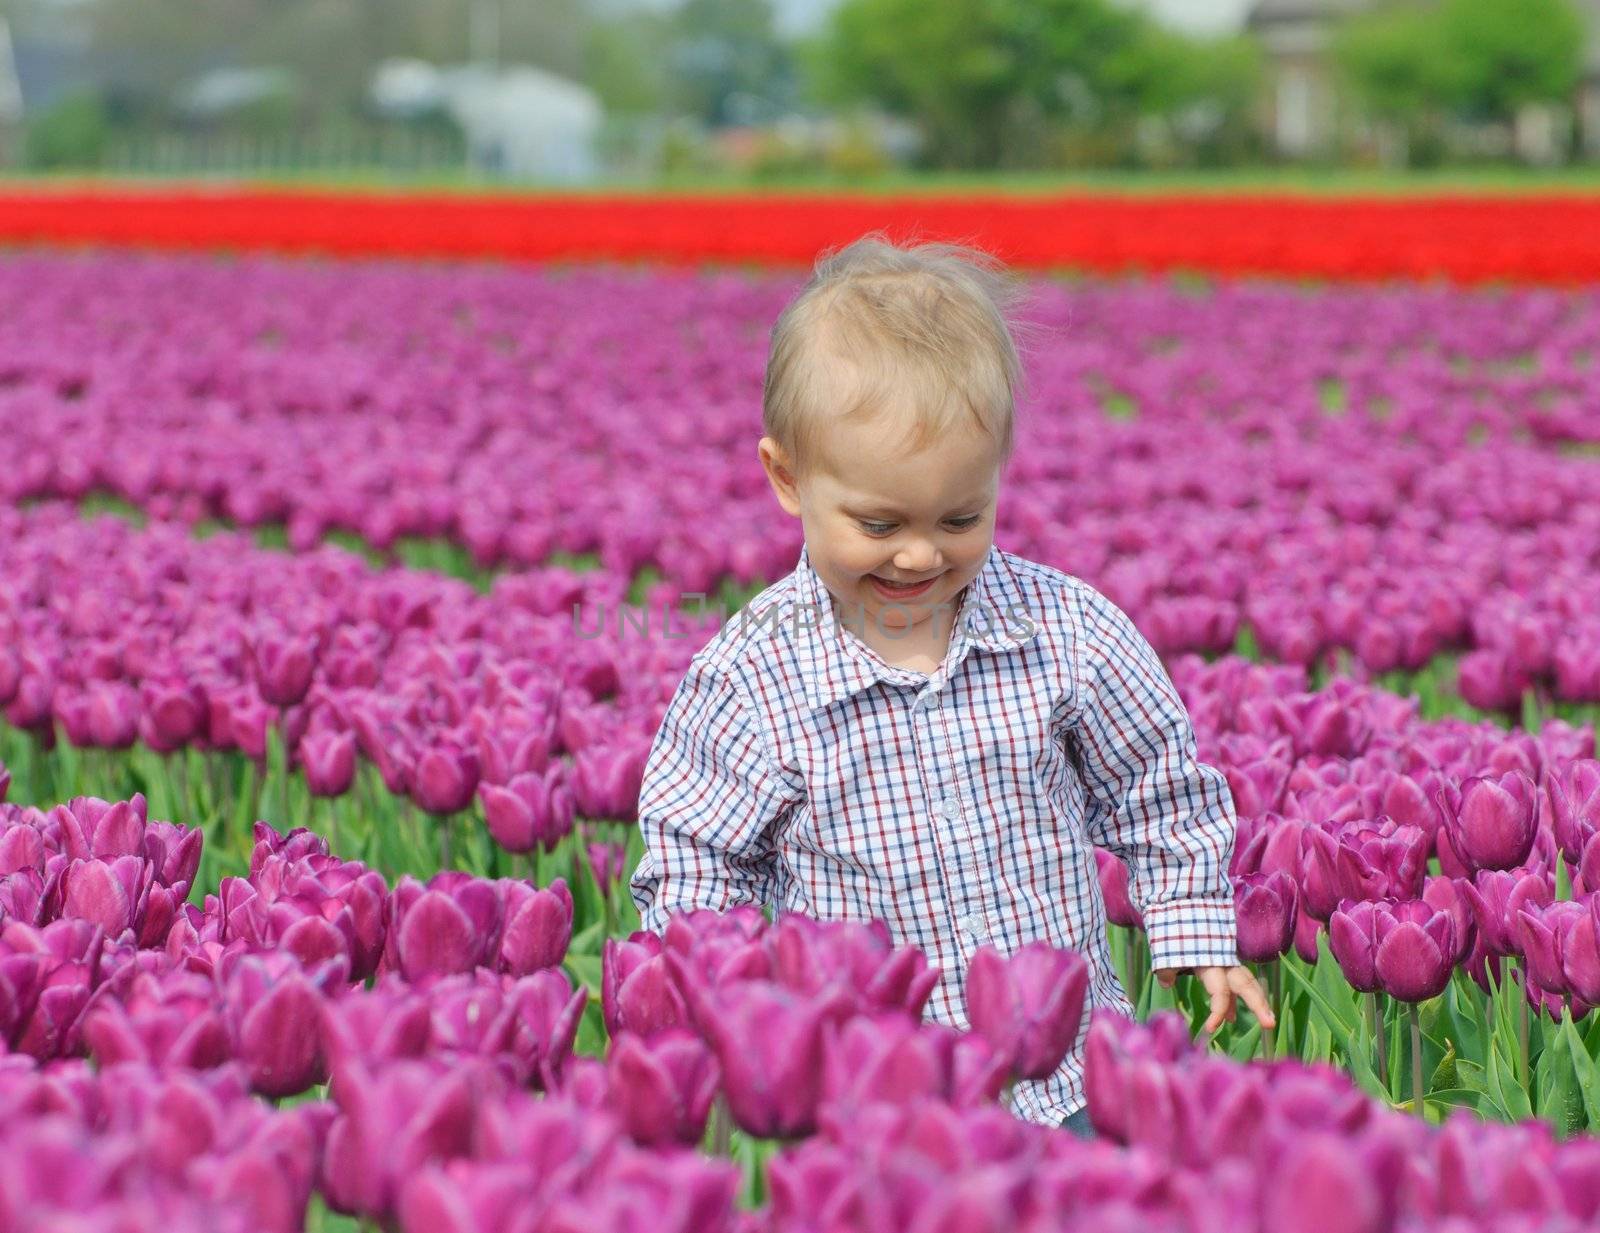 Boy runs between of the purple tulips field